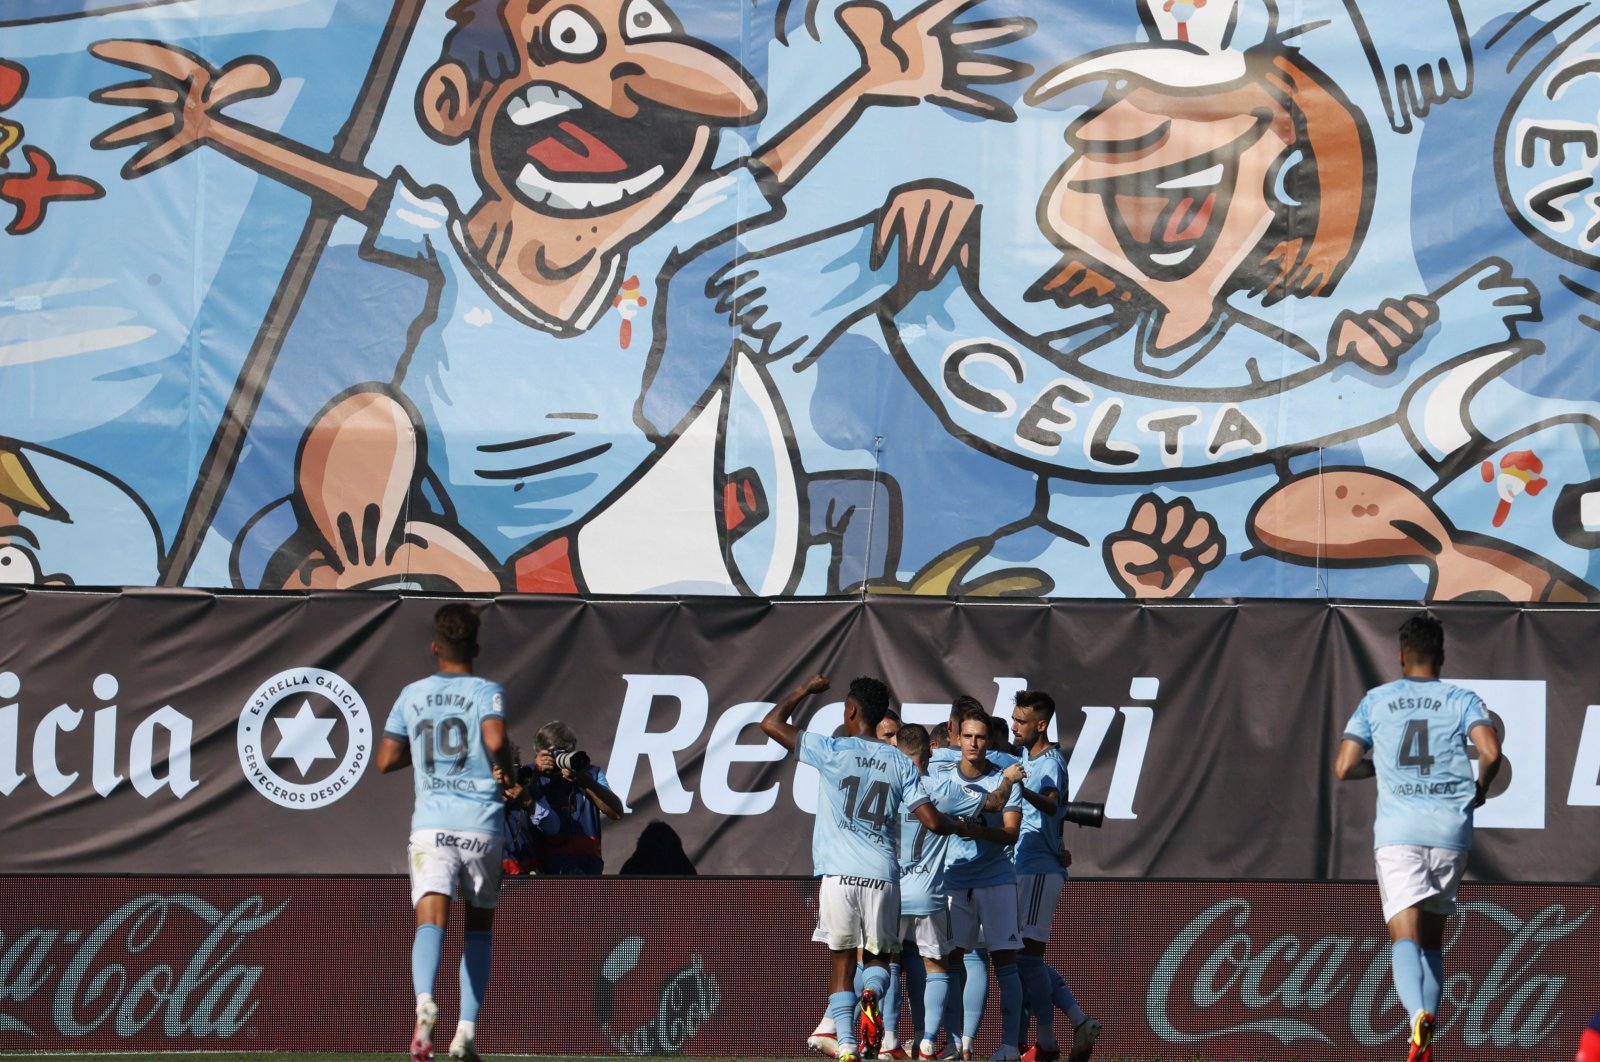 Celta de Vigo's players celebrate after scoring the 1-1 goal during a Spanish LaLiga soccer match between Celta de Vigo and Atletico Madrid at Balaidos stadium in Vigo, Galicia, Spain, Aug. 15, 2021. (EPA Photo)